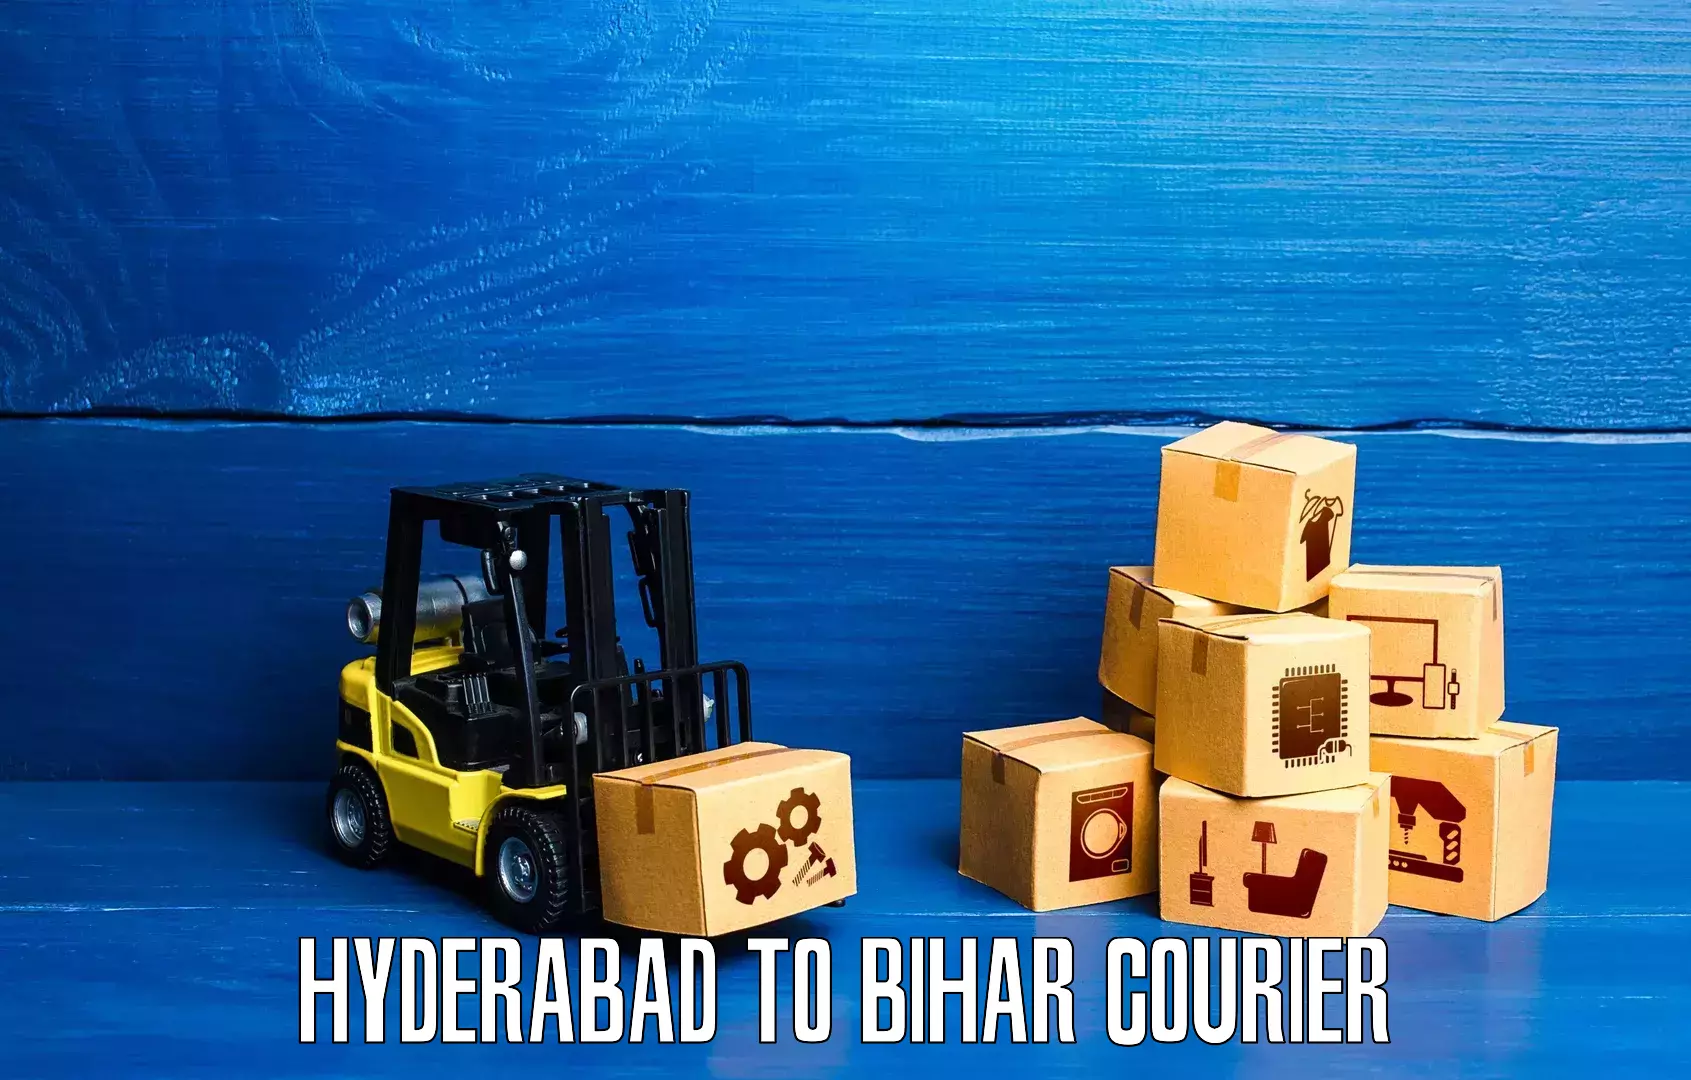 Advanced shipping technology Hyderabad to Dhaka